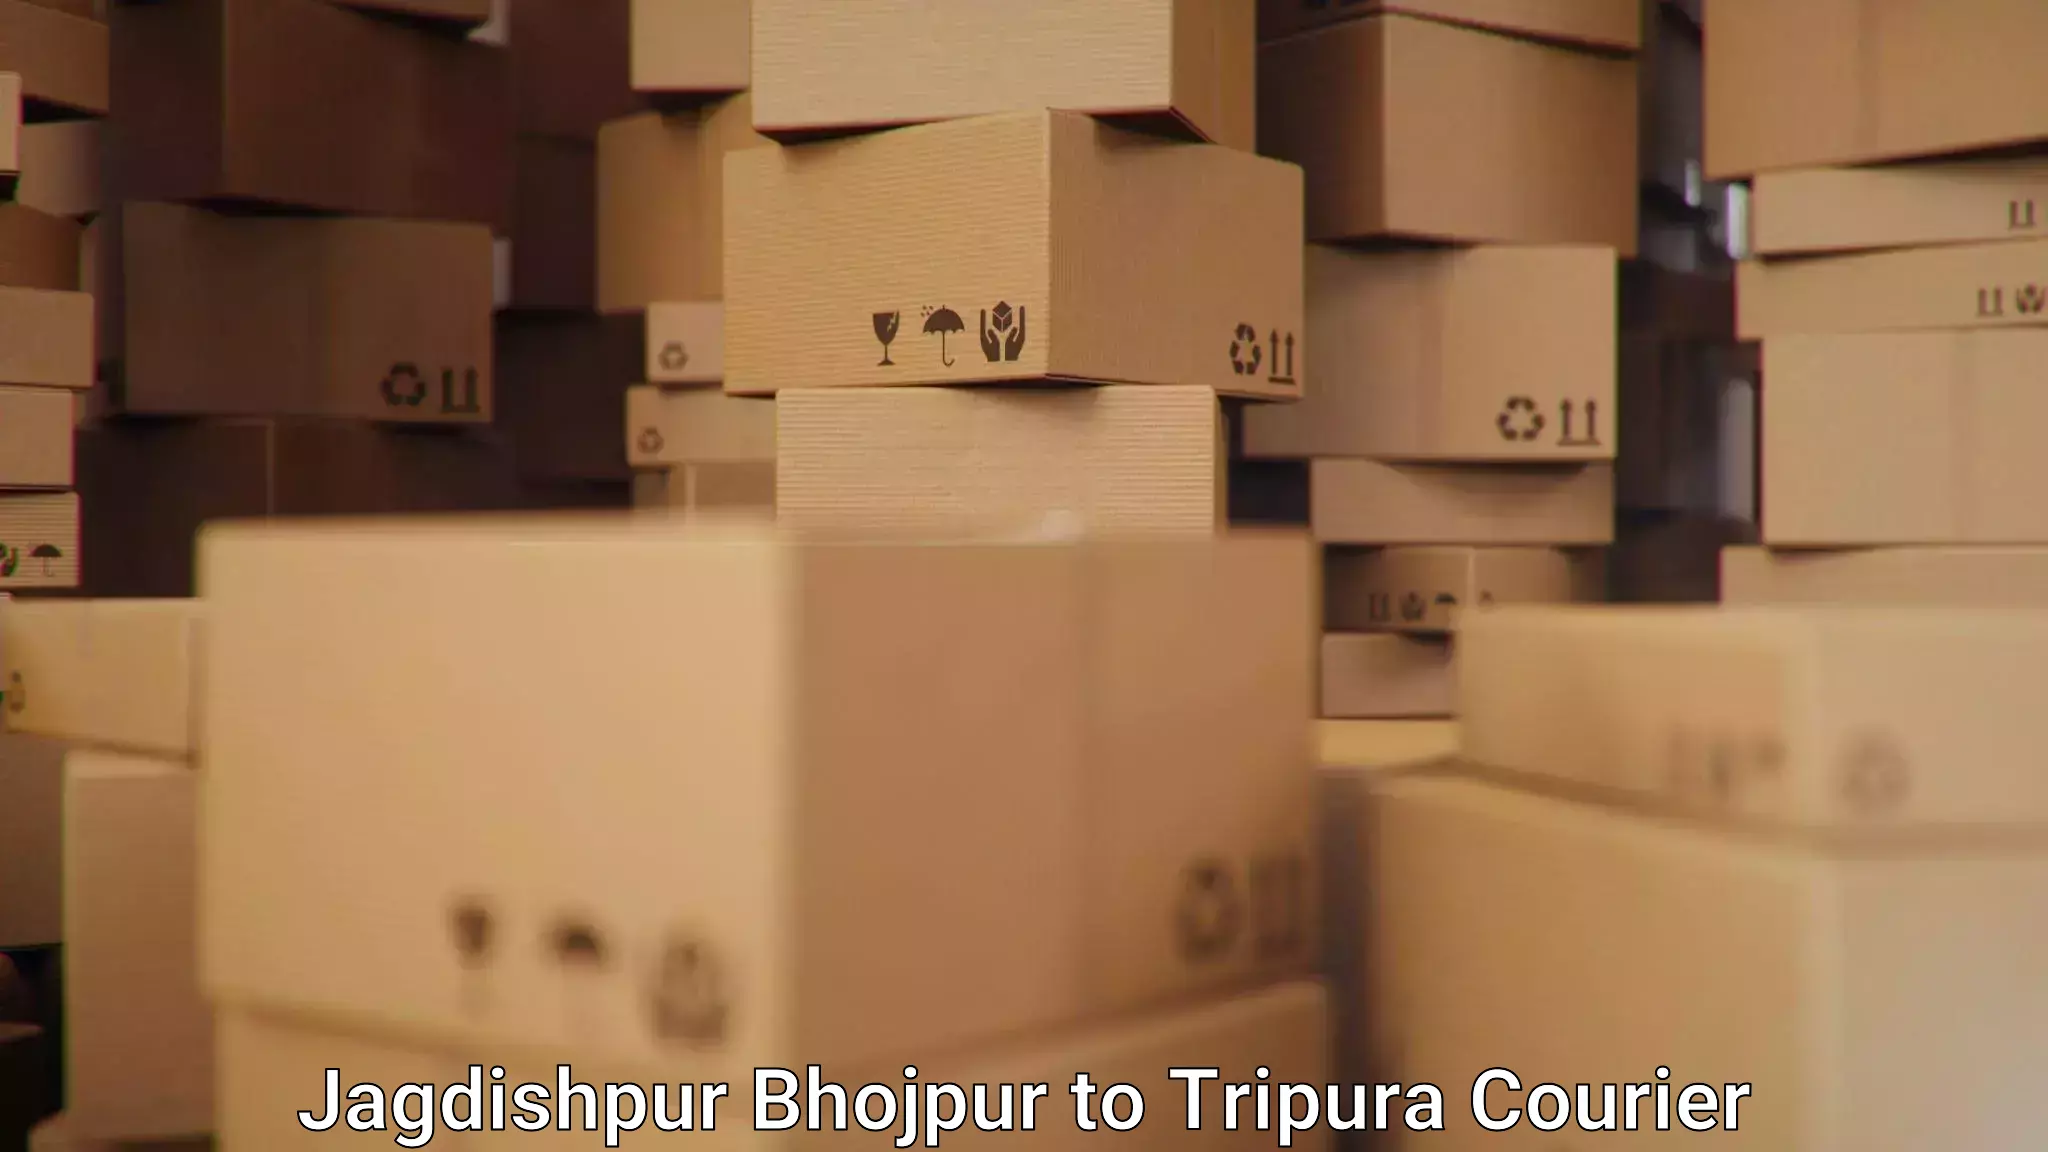 Express courier facilities Jagdishpur Bhojpur to Udaipur Tripura